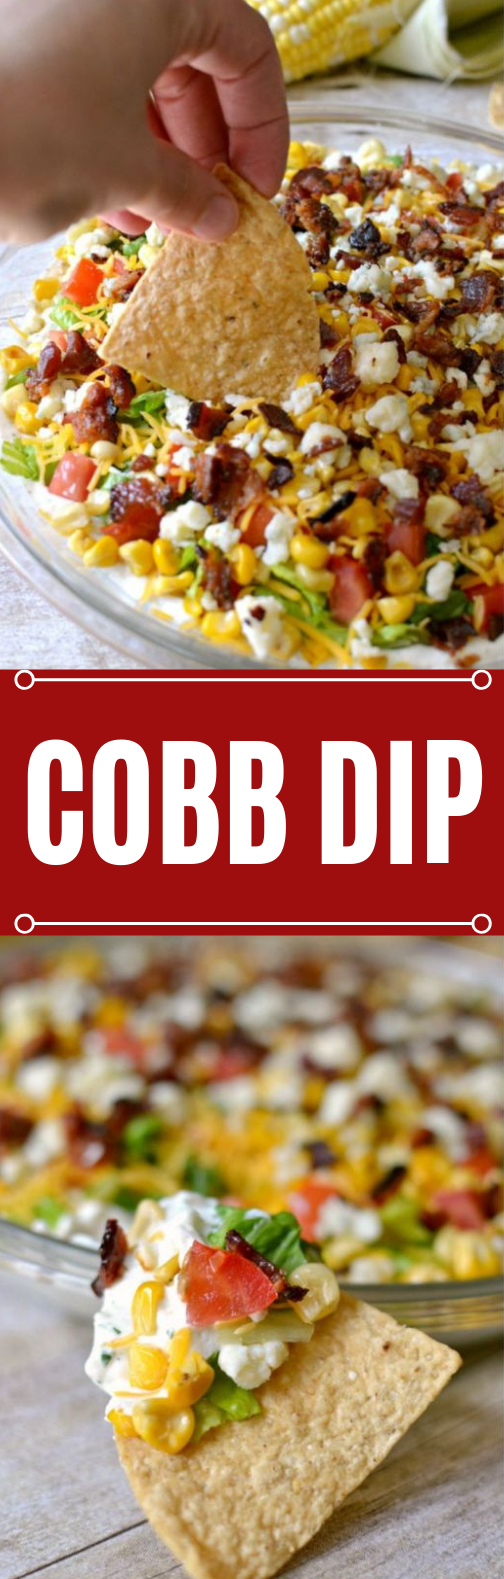 Cobb Dip #appetizers #recipes